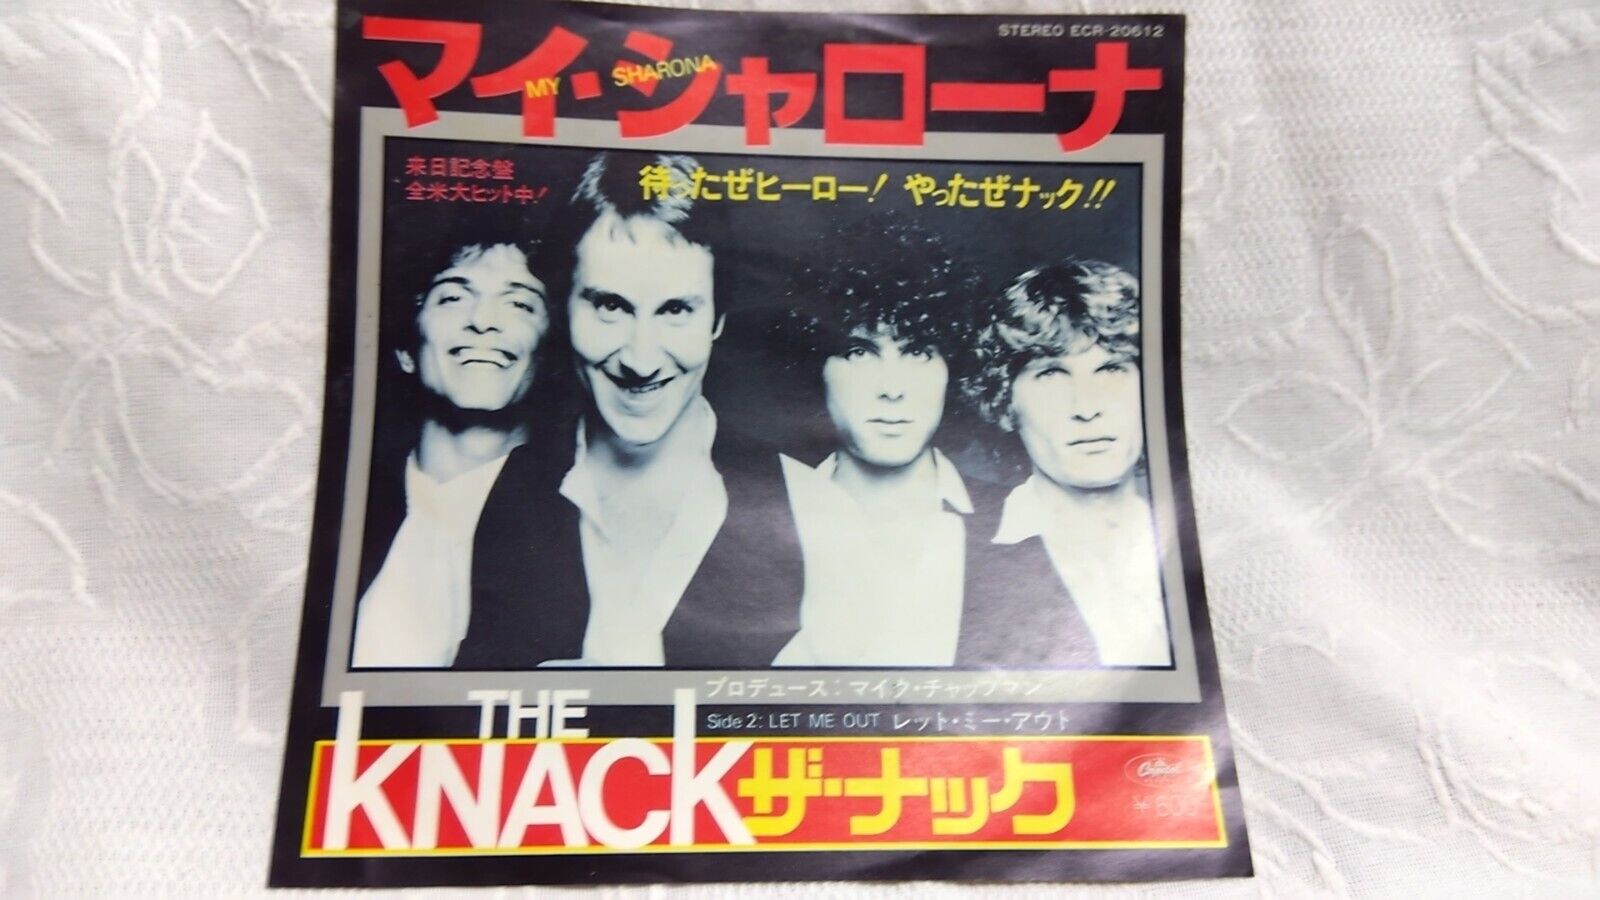 MY SHARONA byTHE KNACK 1979 EP Vinyl ECR-20612